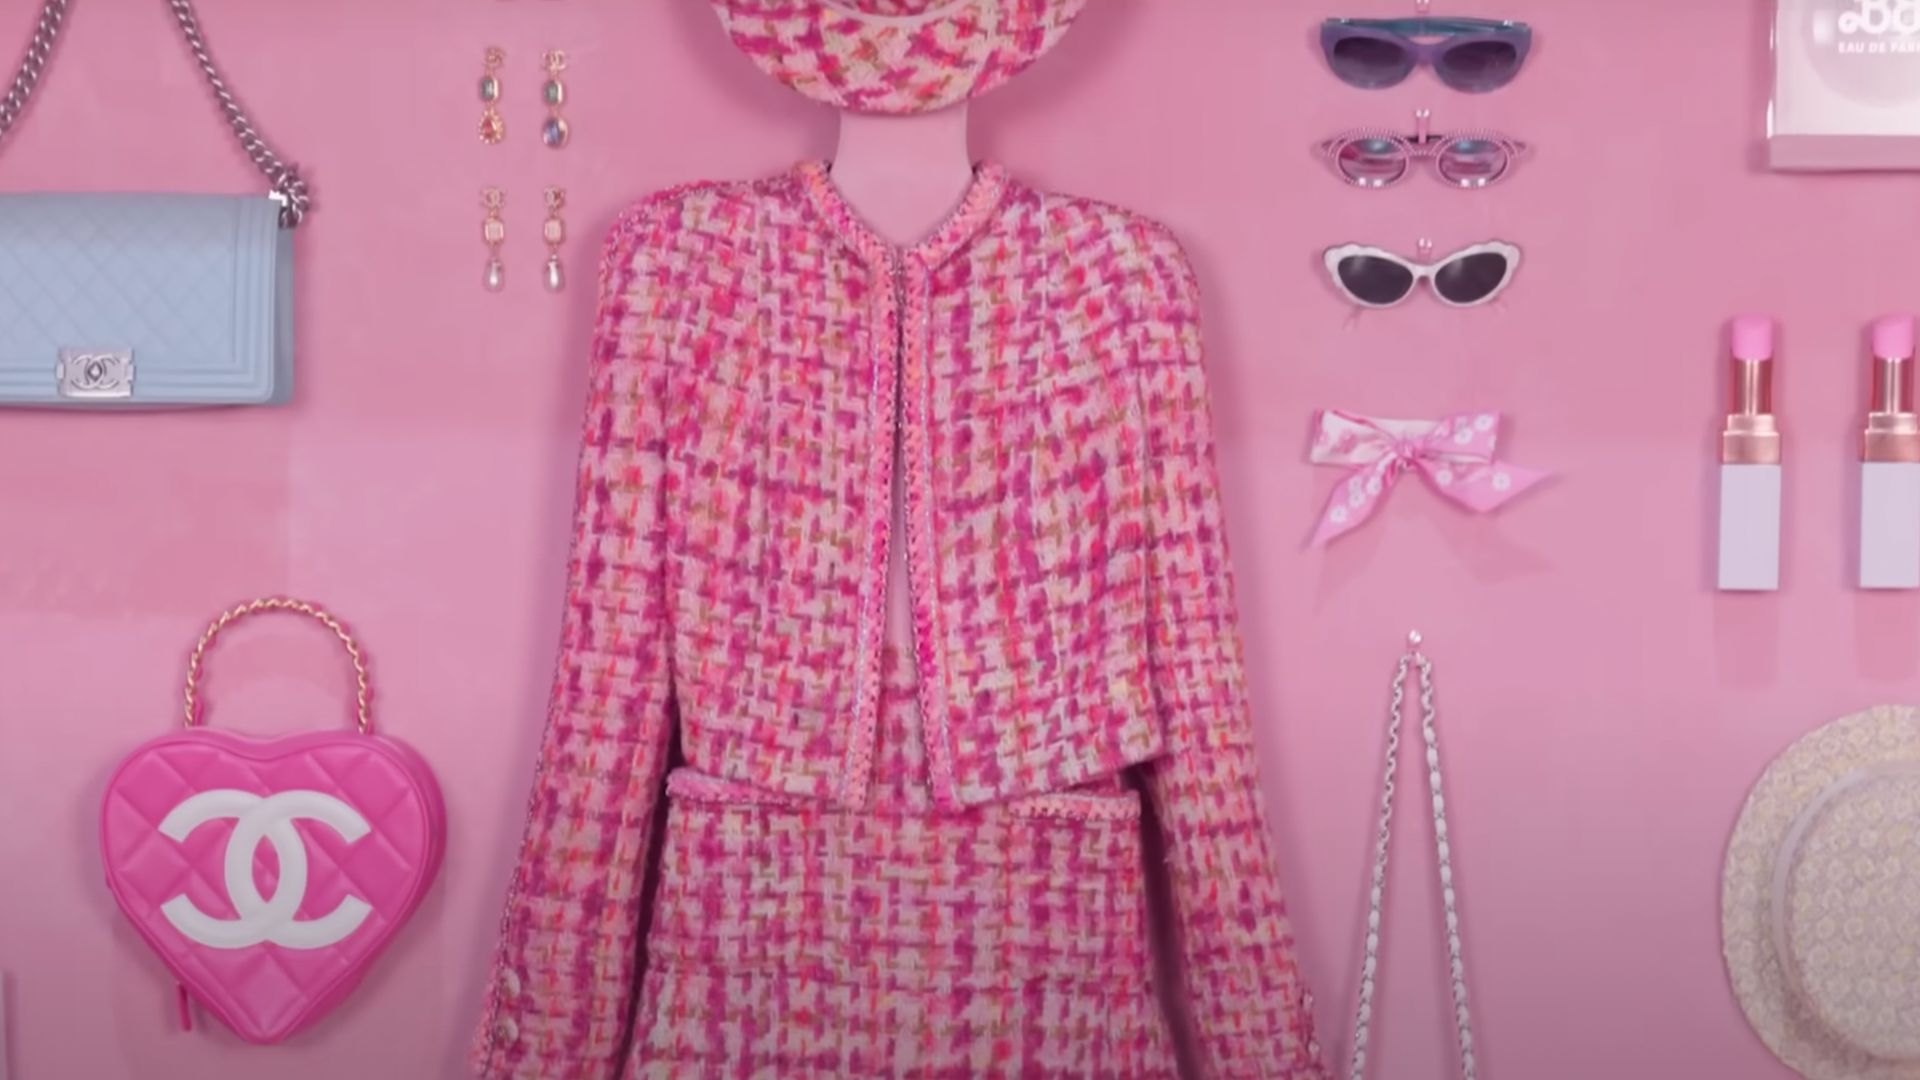 Barbie's pink Chanel wardrobe and heart shaped chanel handbag